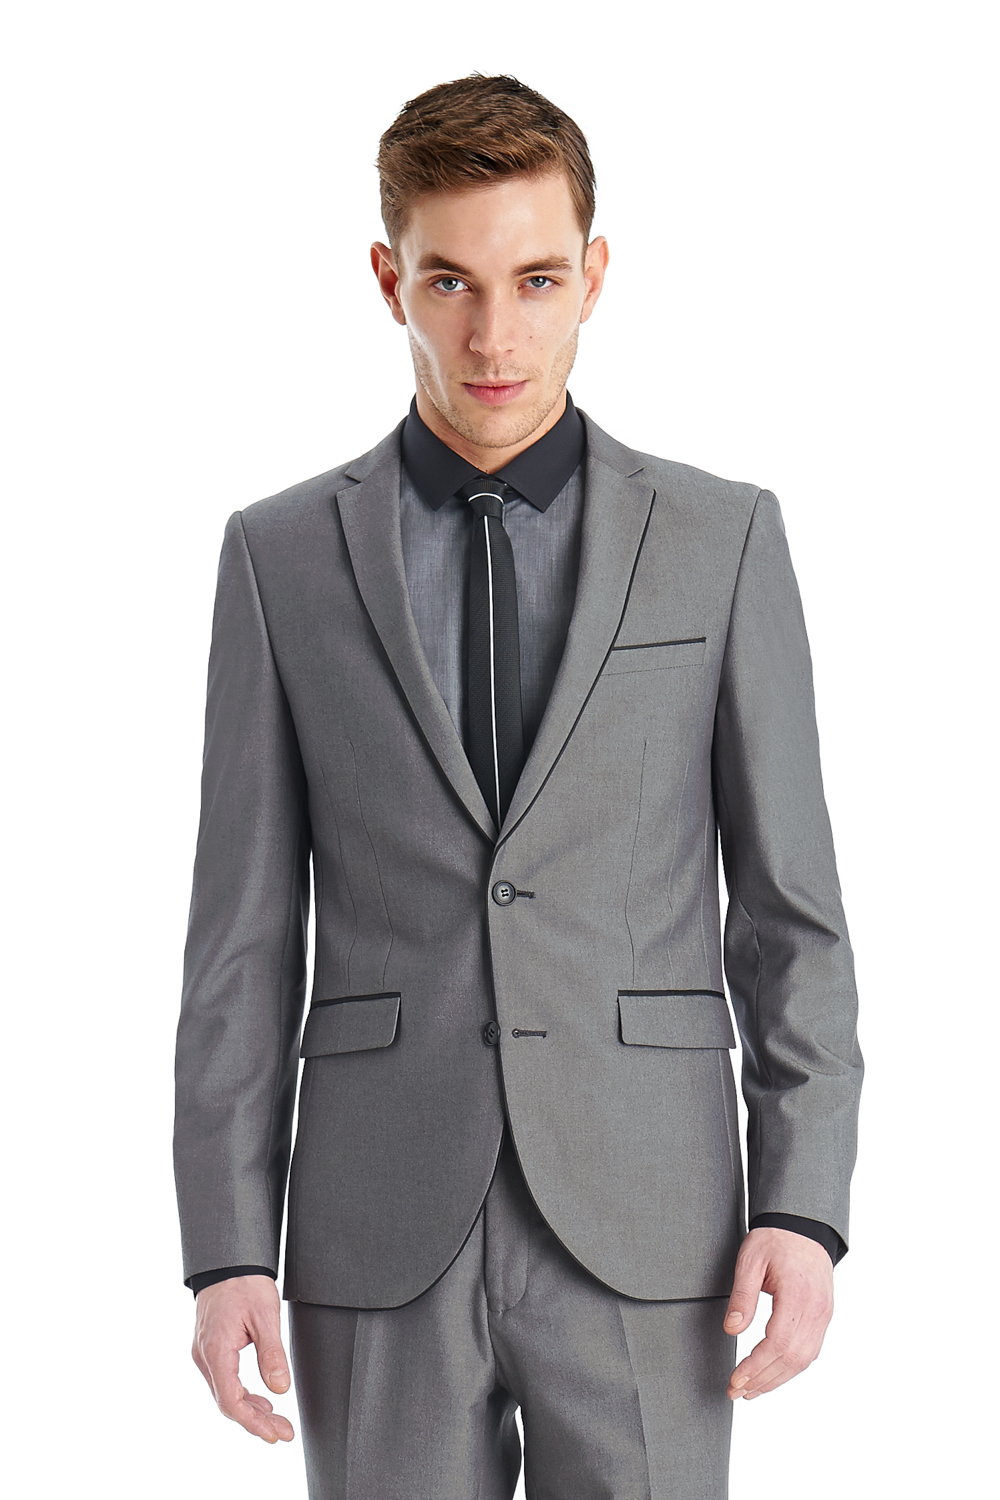 Ventuno 21 Slim Fit Light Grey Suit